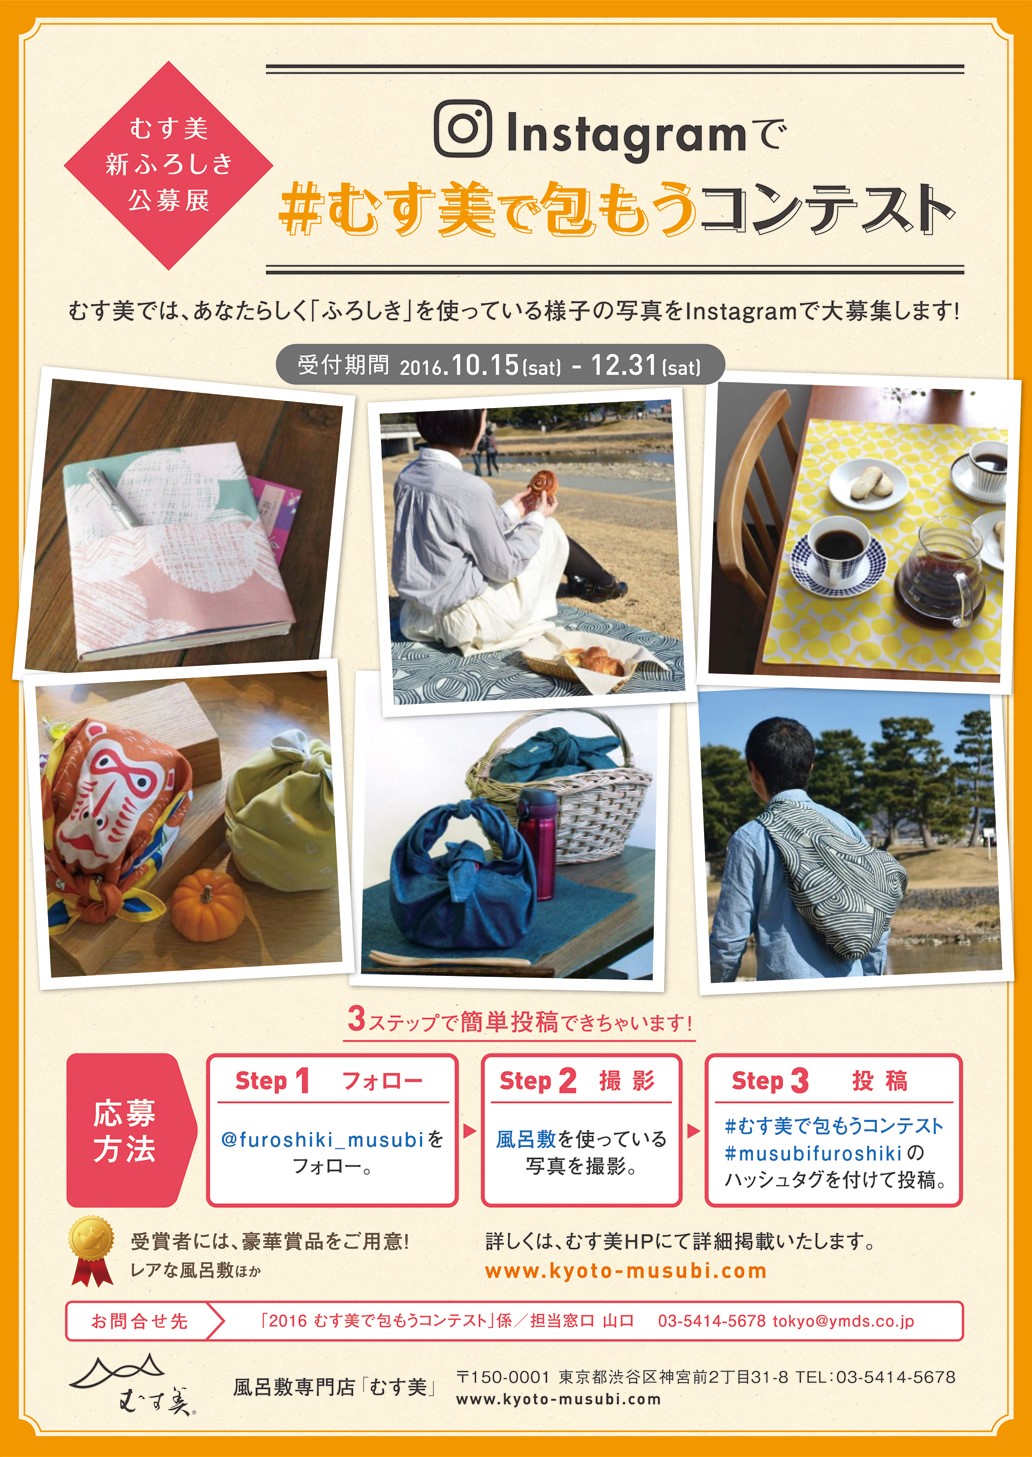 http://www.kyoto-musubi.com/news/coubo.2016gazou.jpg